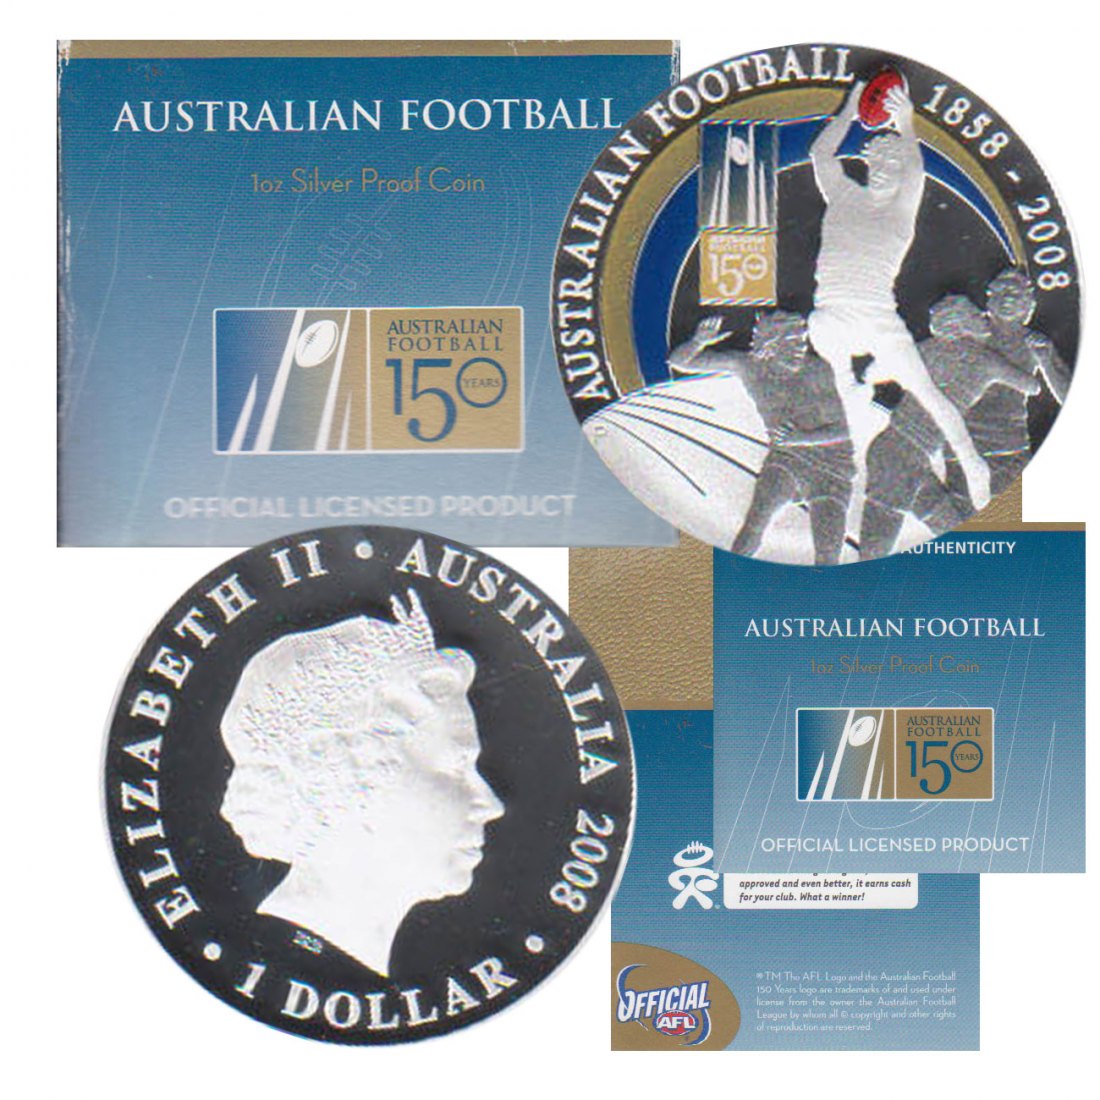  Australien 1$-Farb-Silbermünze *150 Jahre Australian Football* 2008 *PP* 1oz Silber nur 12.500St!   